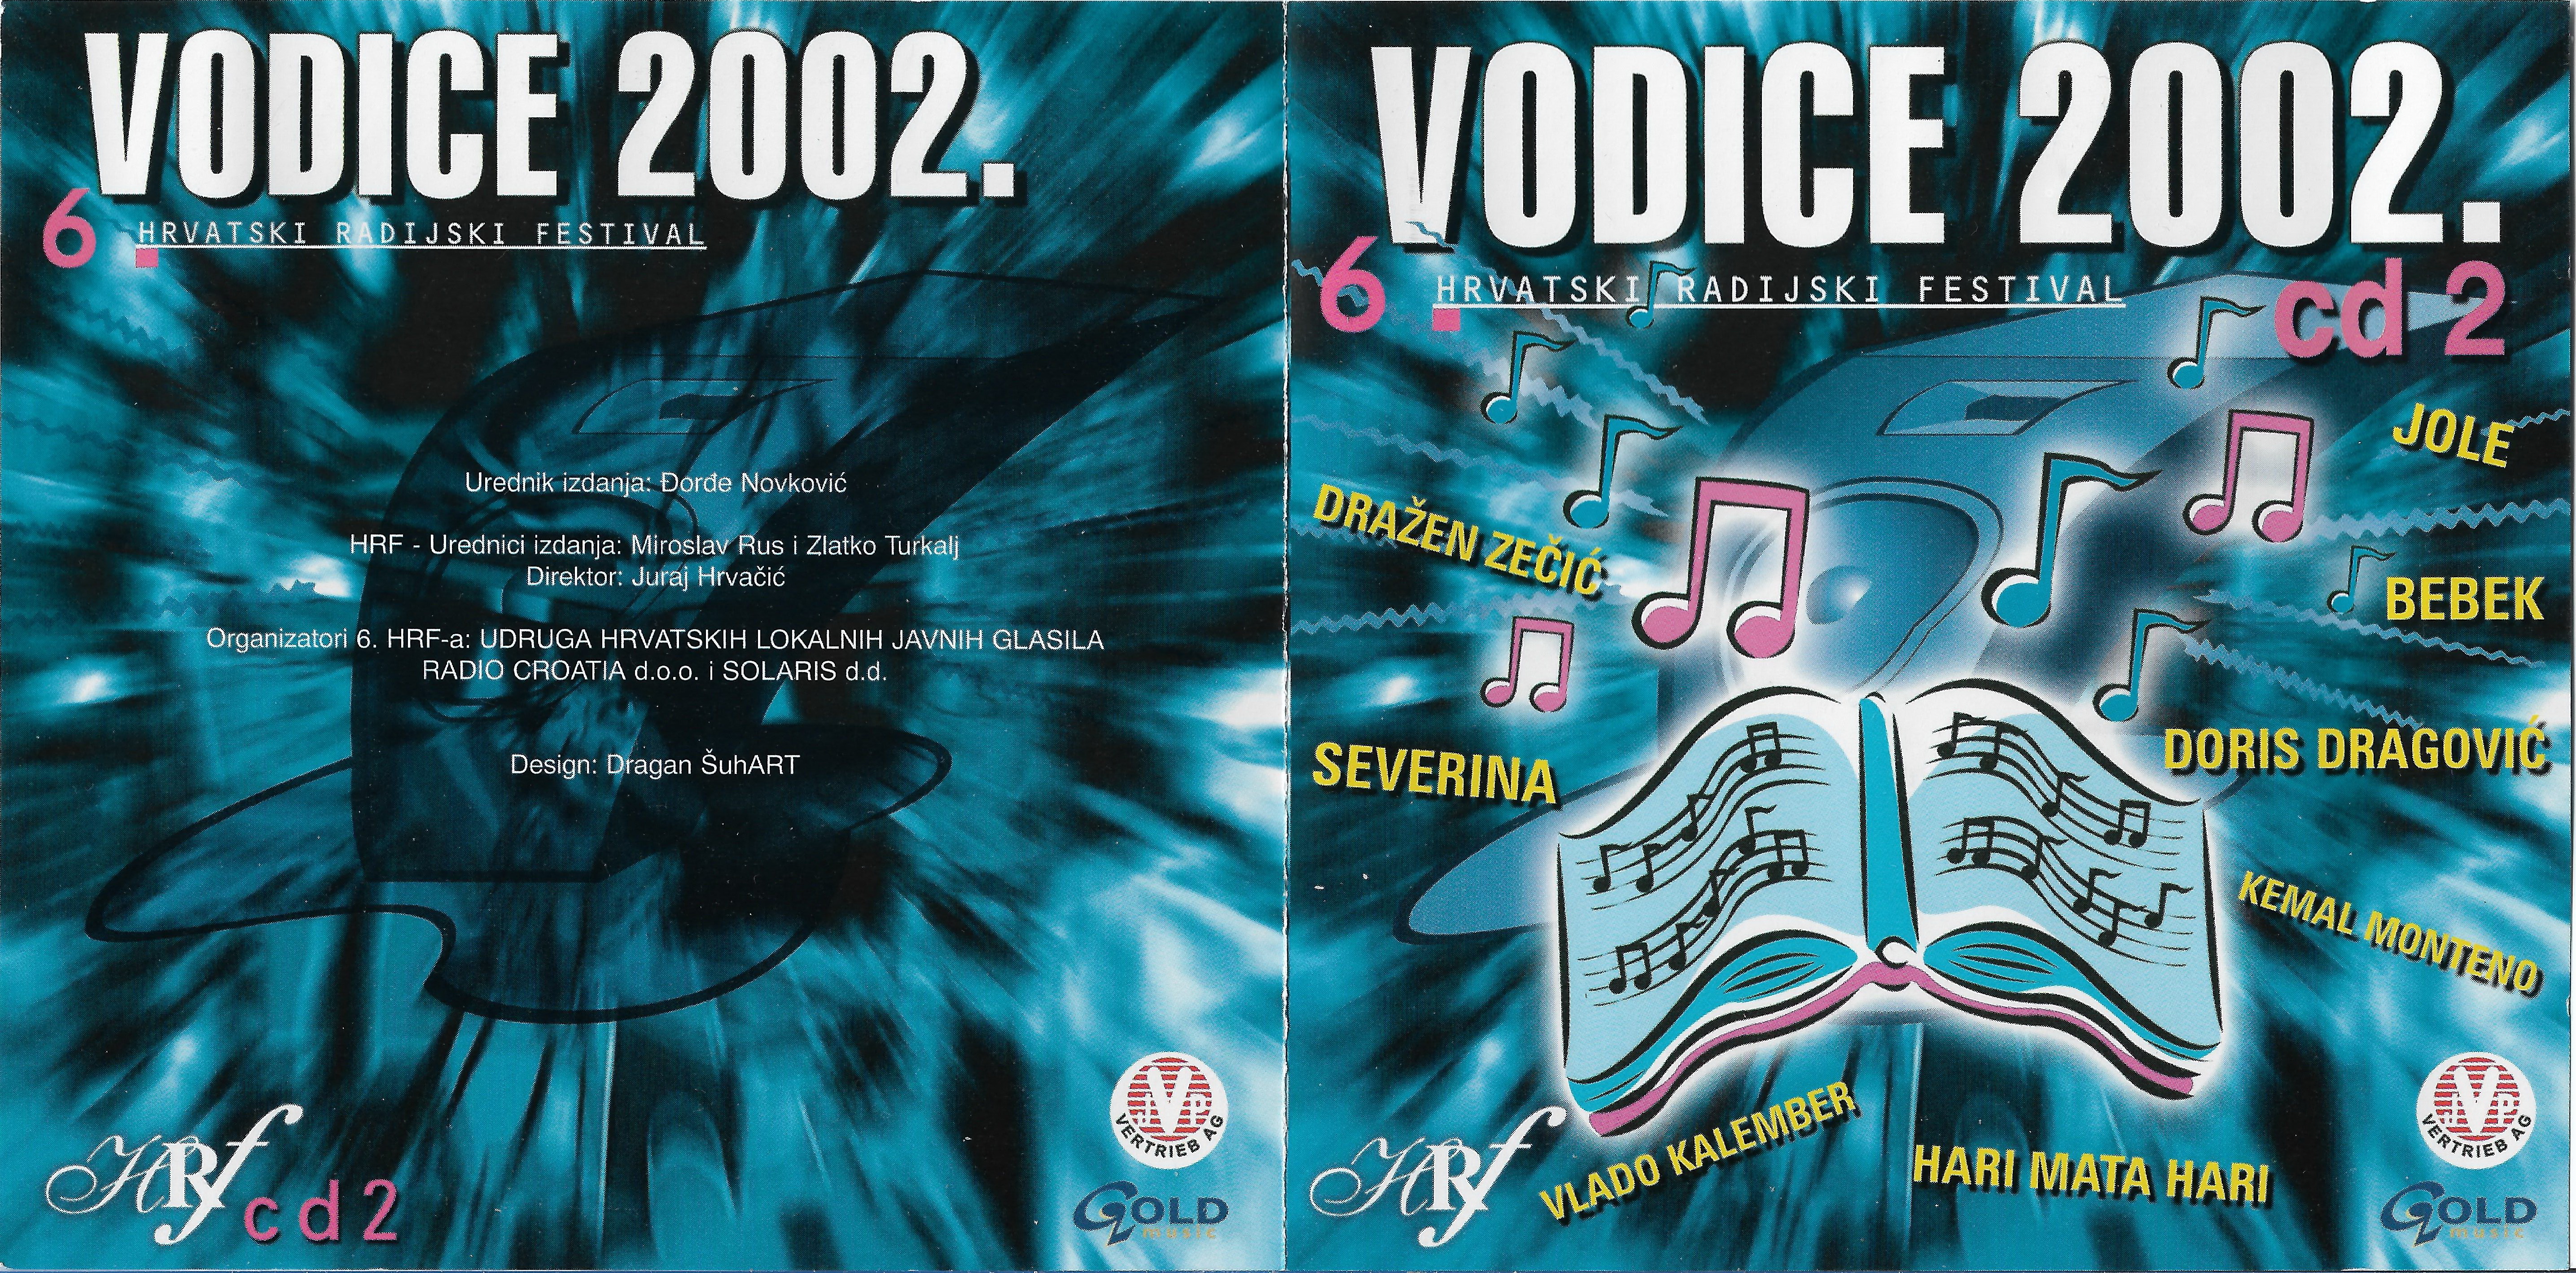 Vodice 2002 CD 2 1